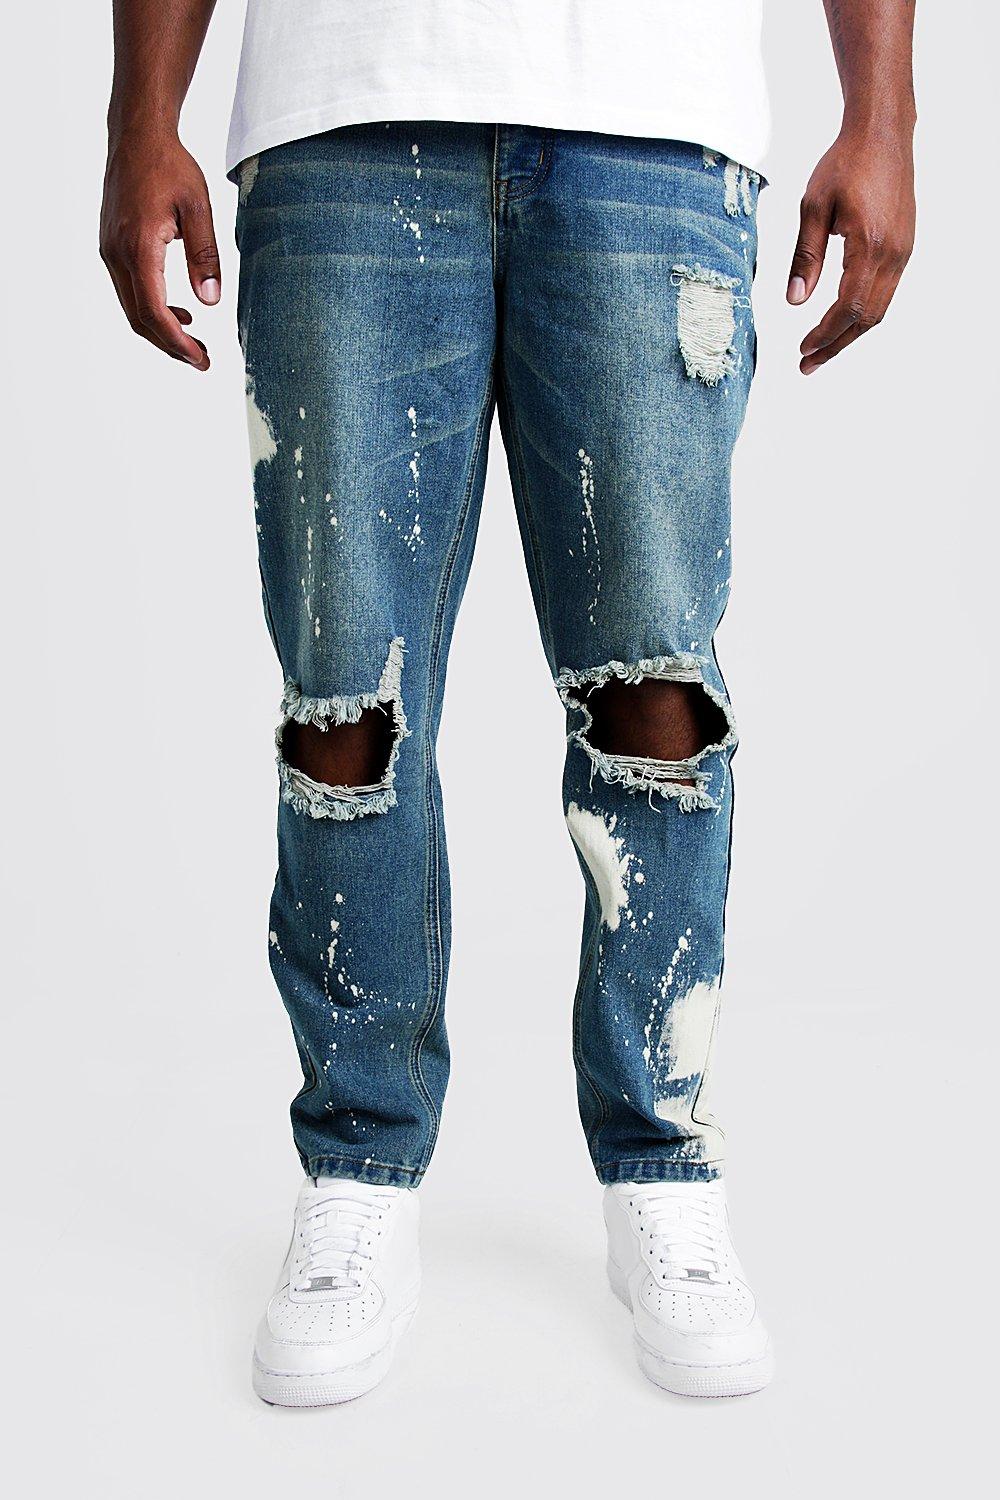 j brand khaki jeans